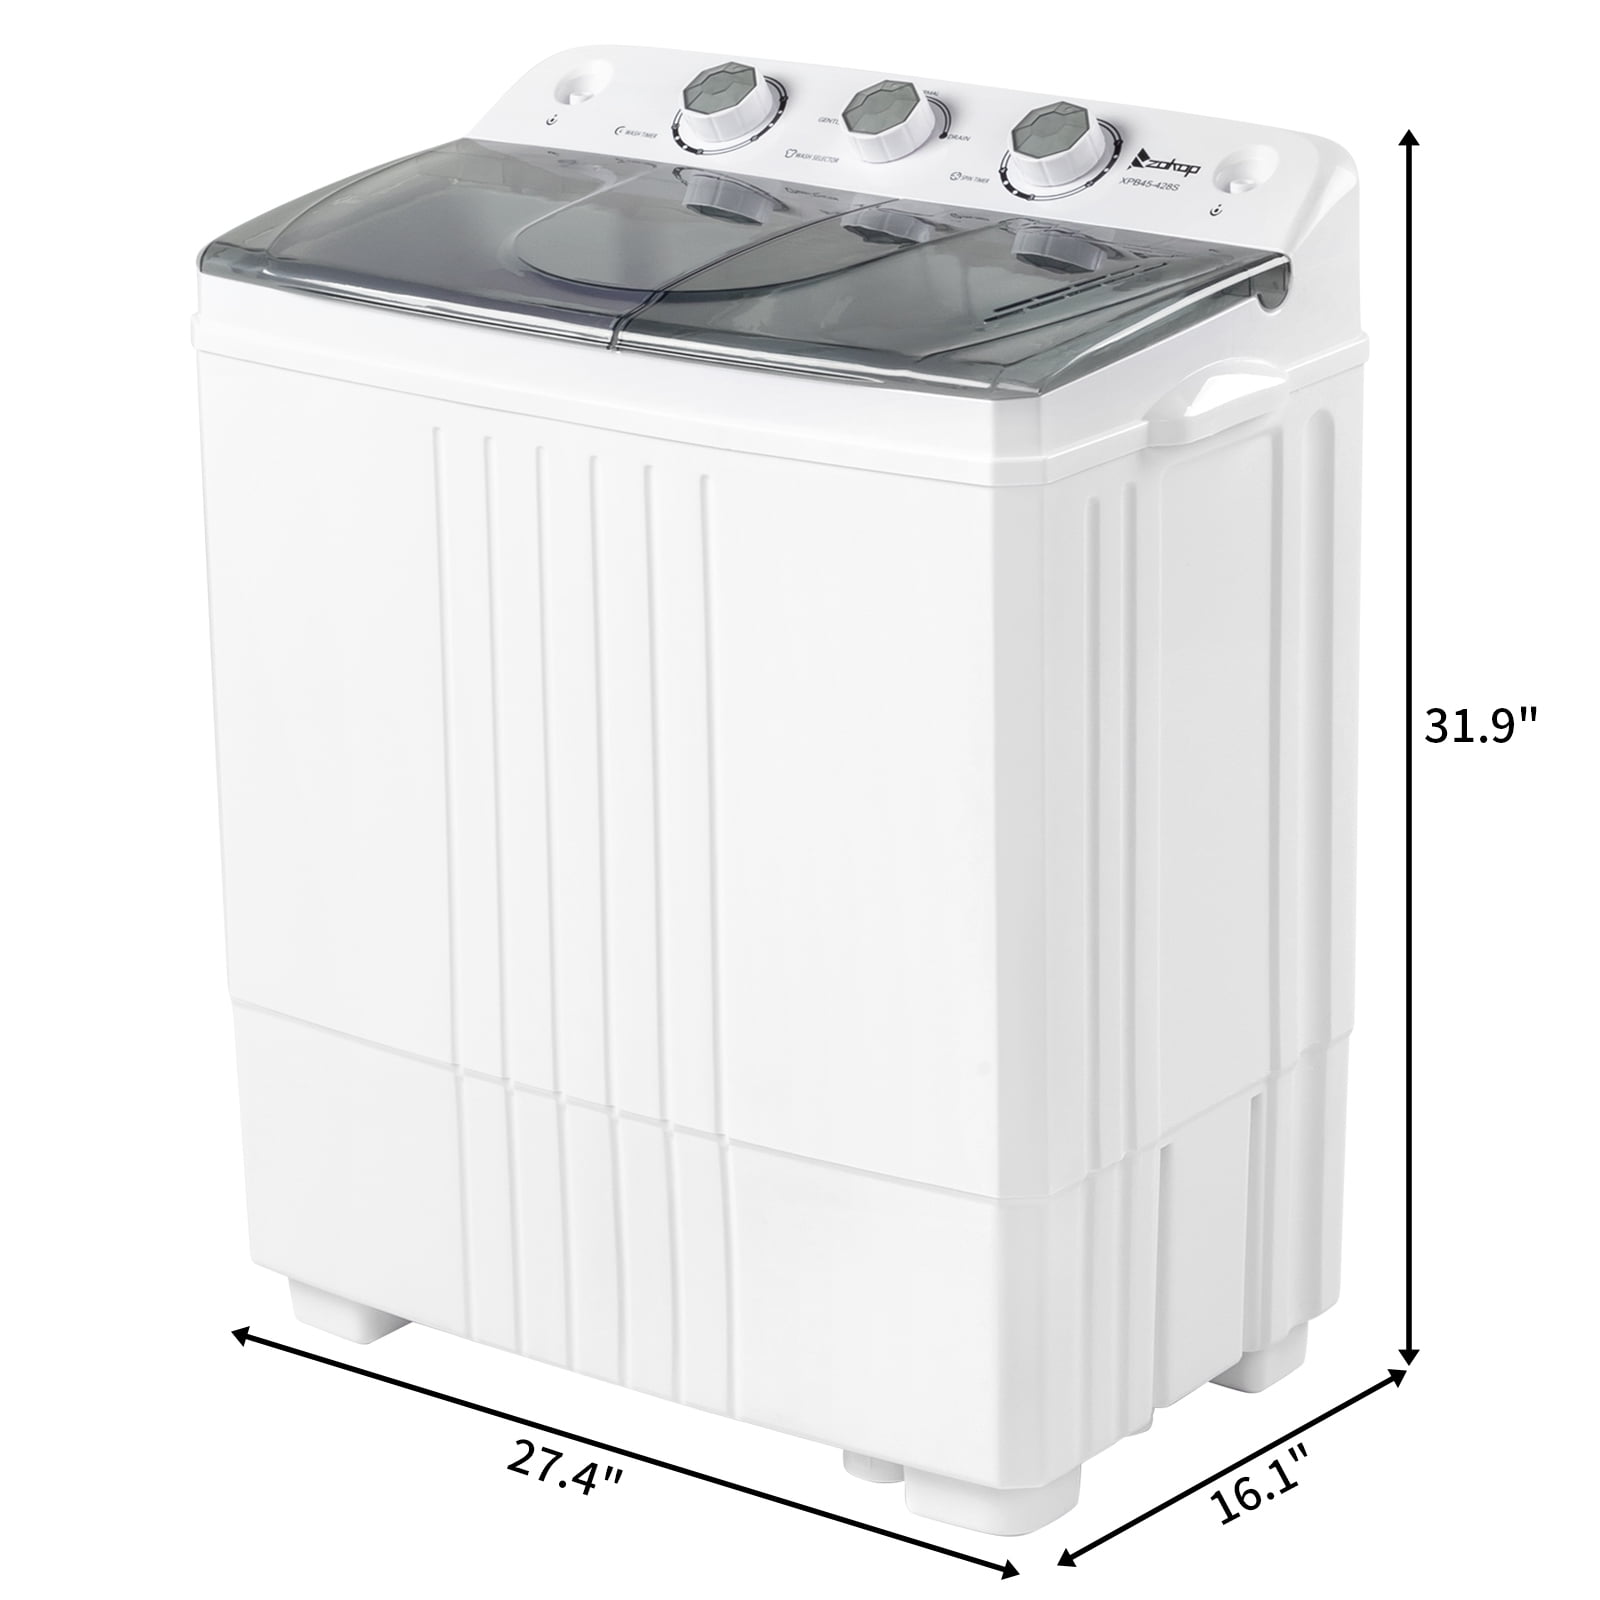 2in1 Mini Washing Machine - 15 Mins Fast Laundry (PPW820) - PowerPacSG